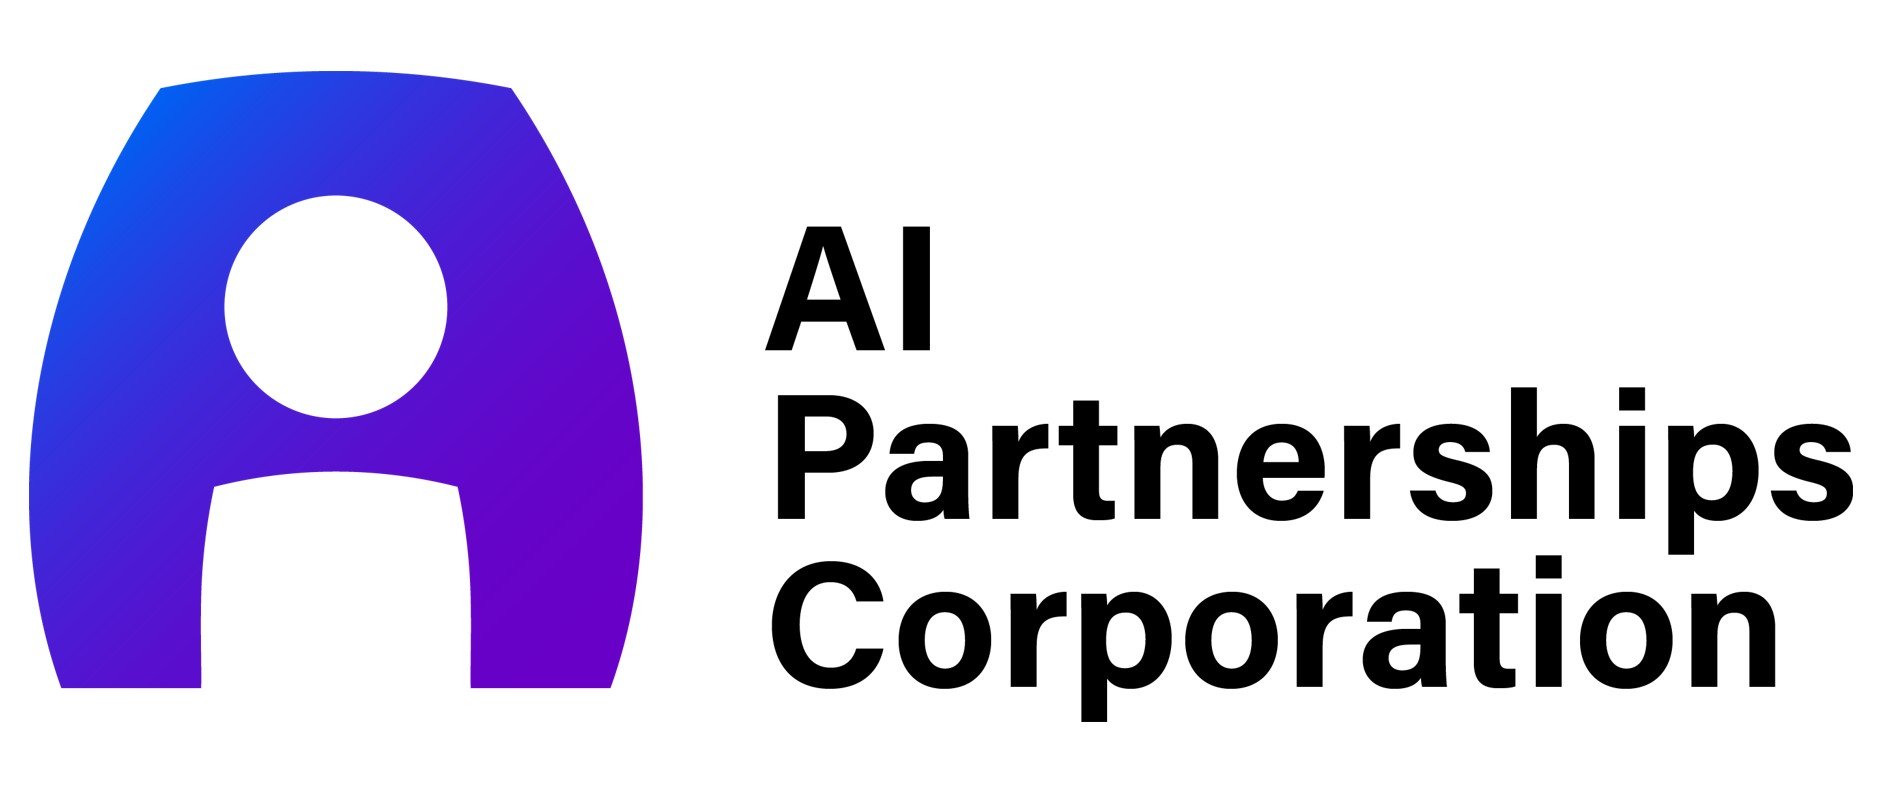 AI partnership corporation logo